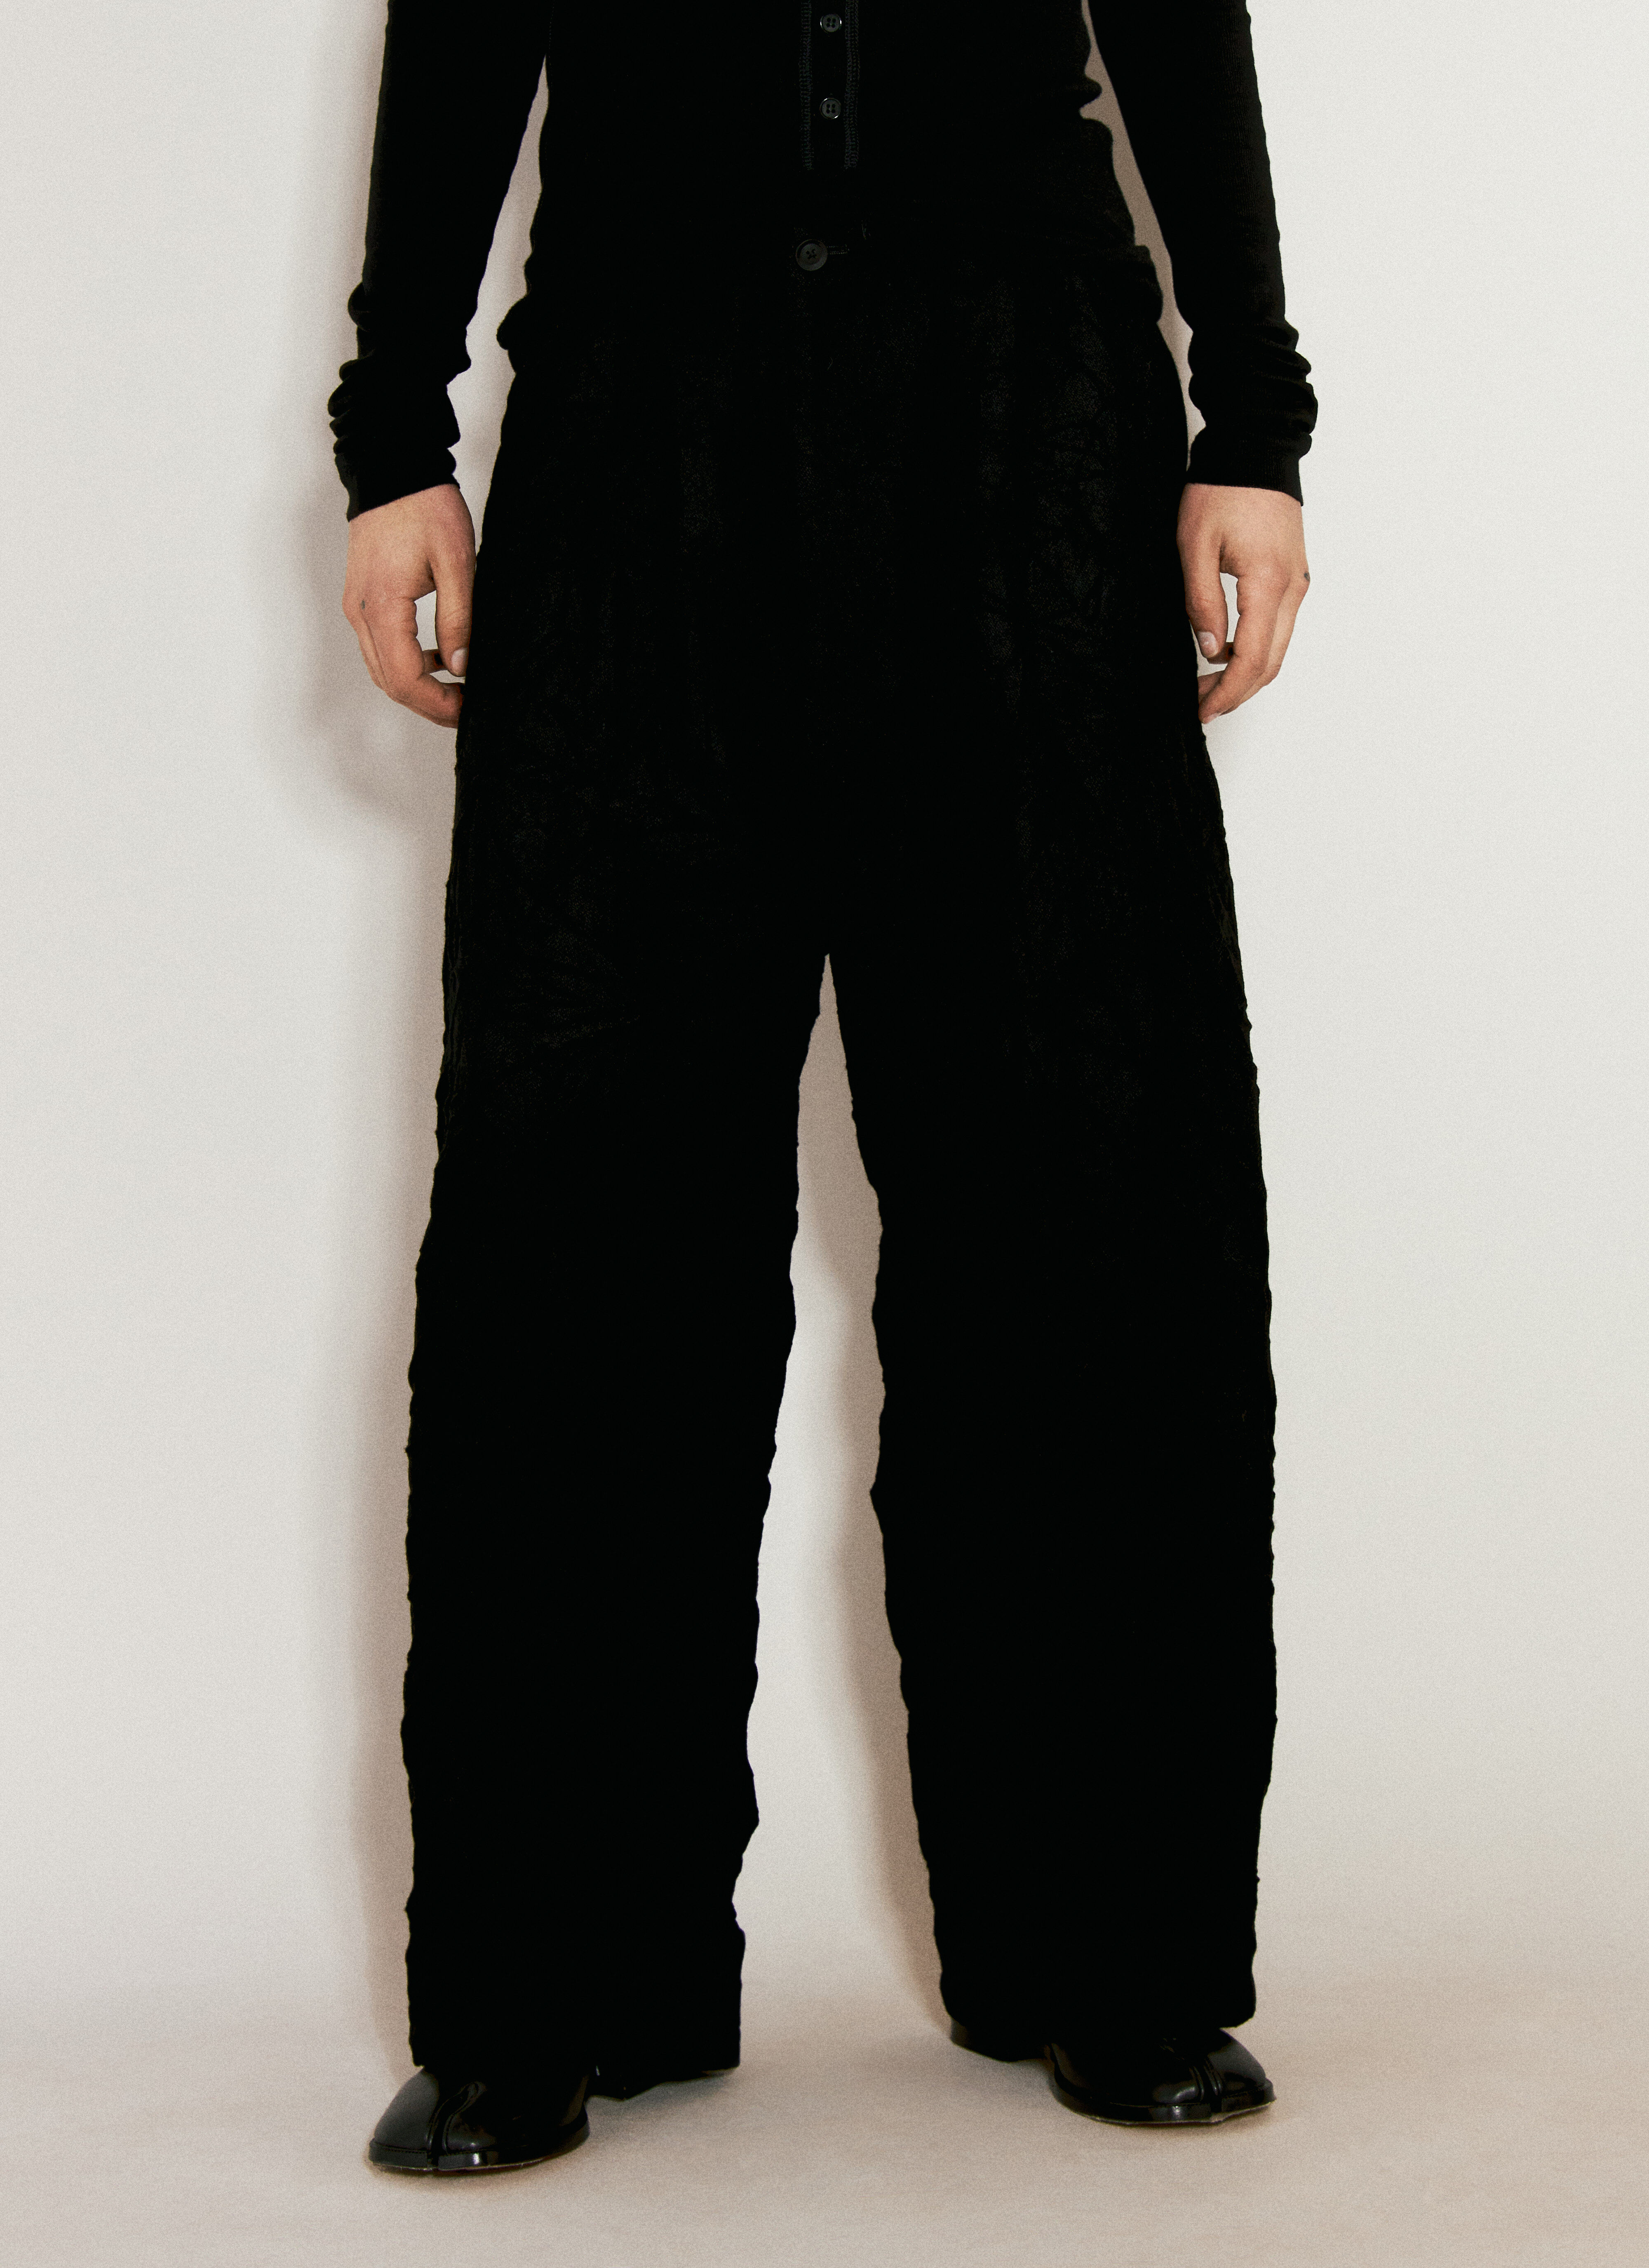 Yohji Yamamoto G-スタンダード ストリングパンツ  ブラック yoy0156012